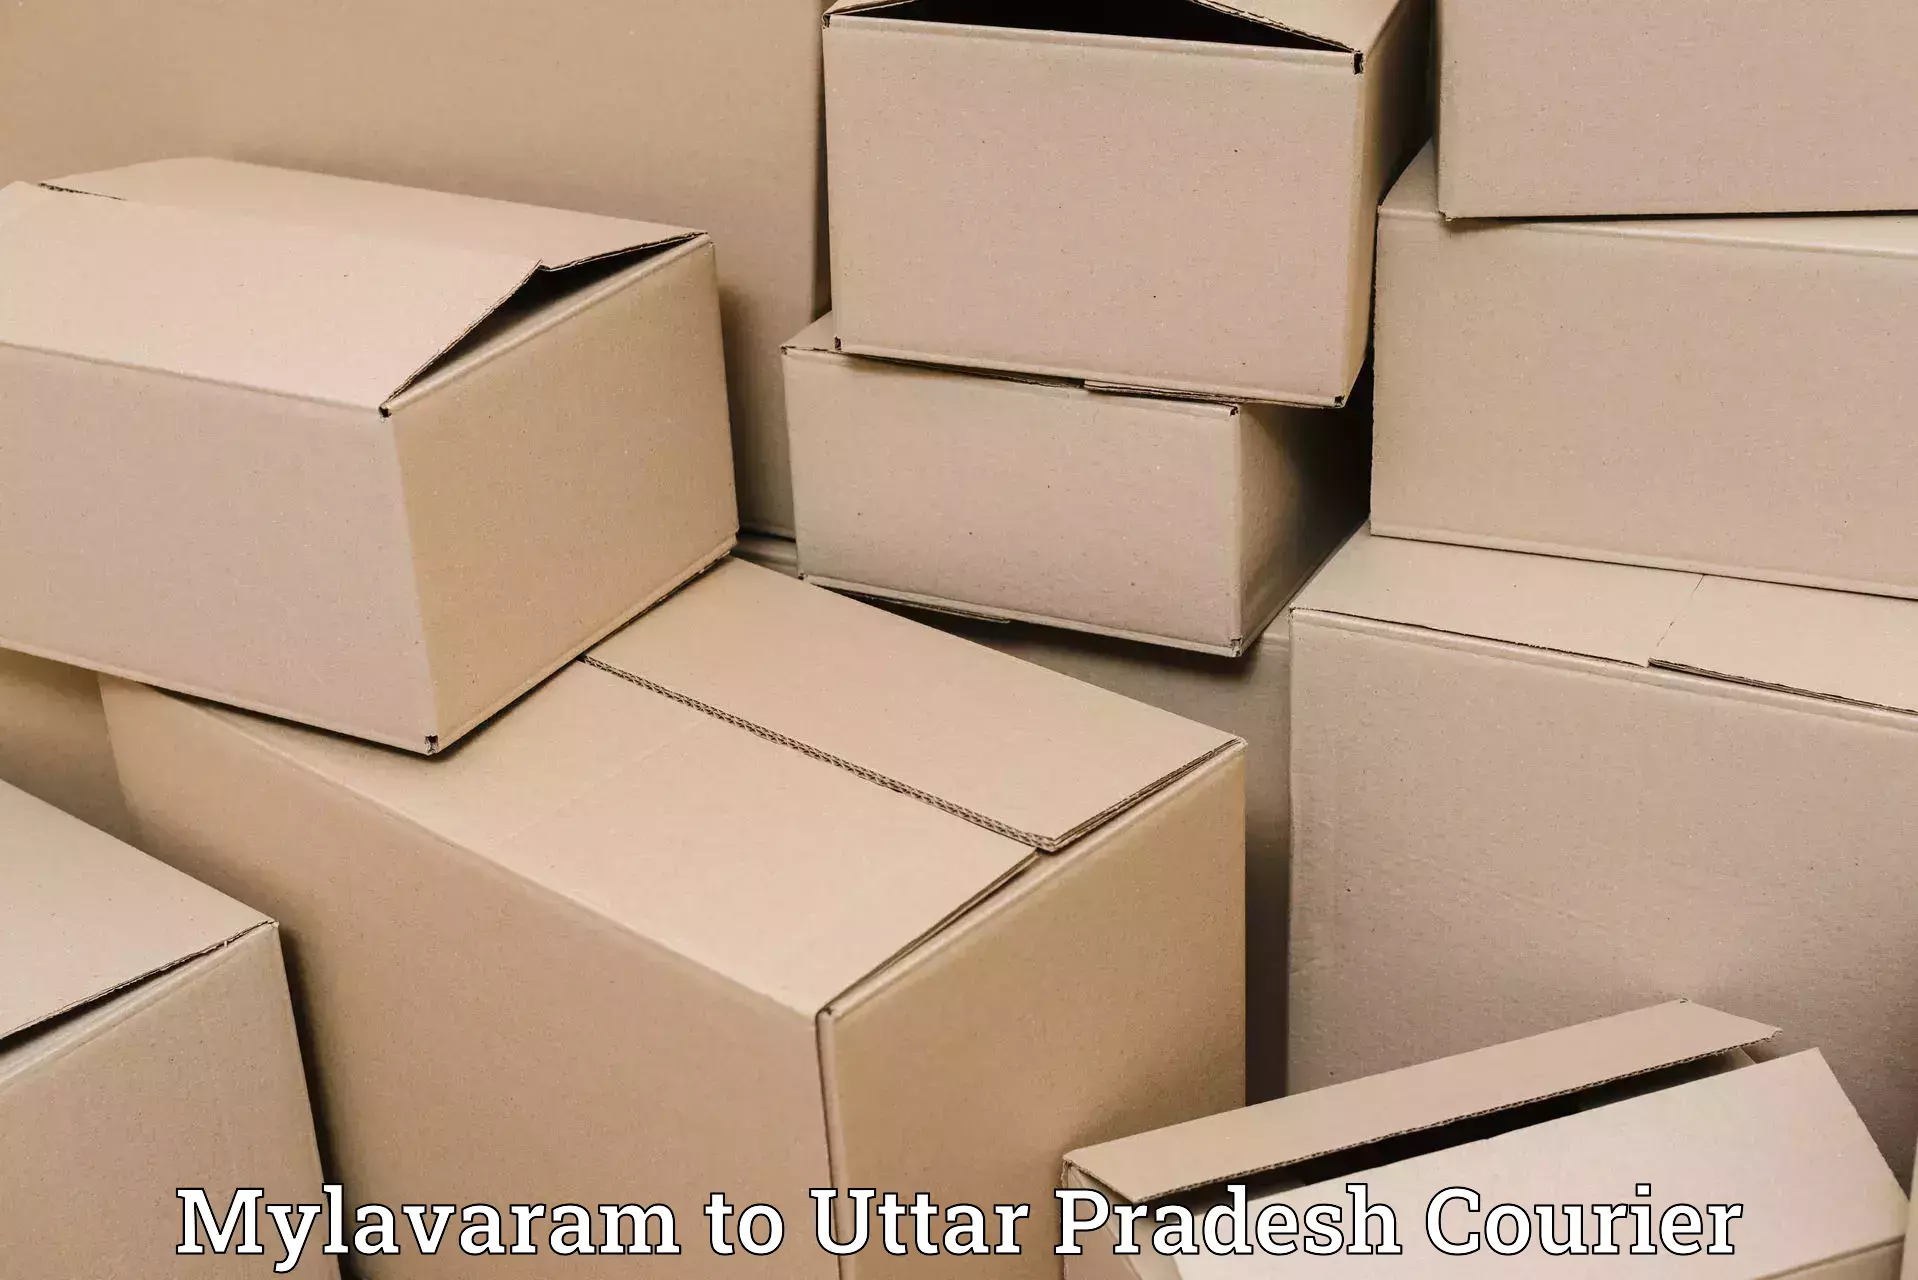 Seamless shipping experience in Mylavaram to Baksha